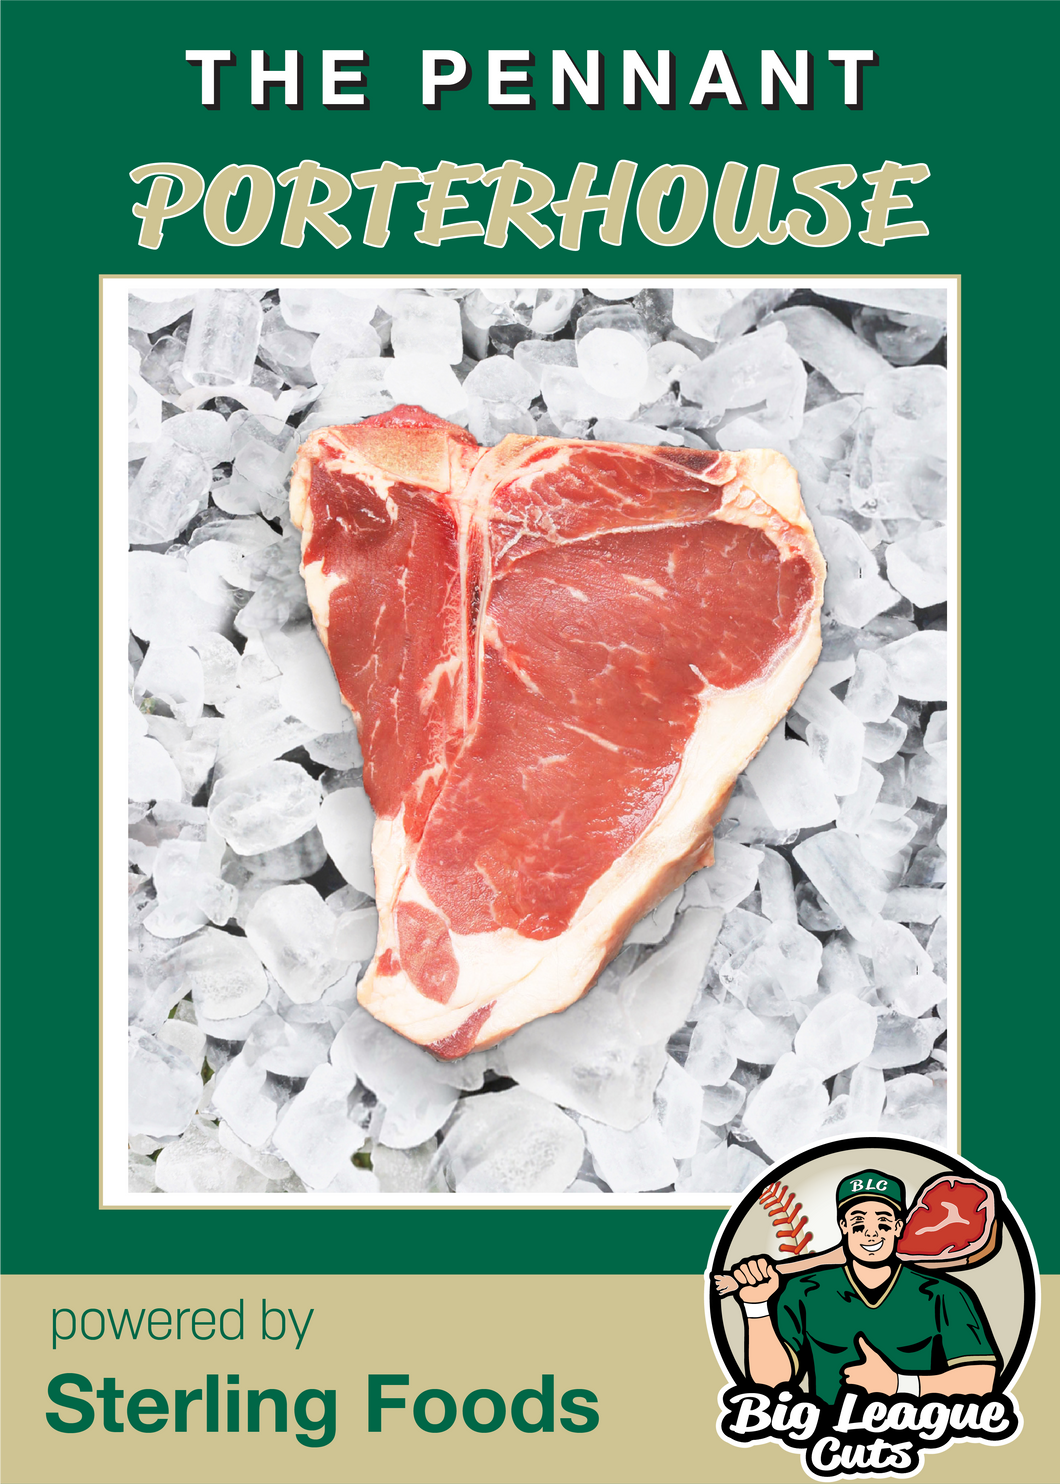 The Pennant Porterhouse (4) 18 oz. steaks